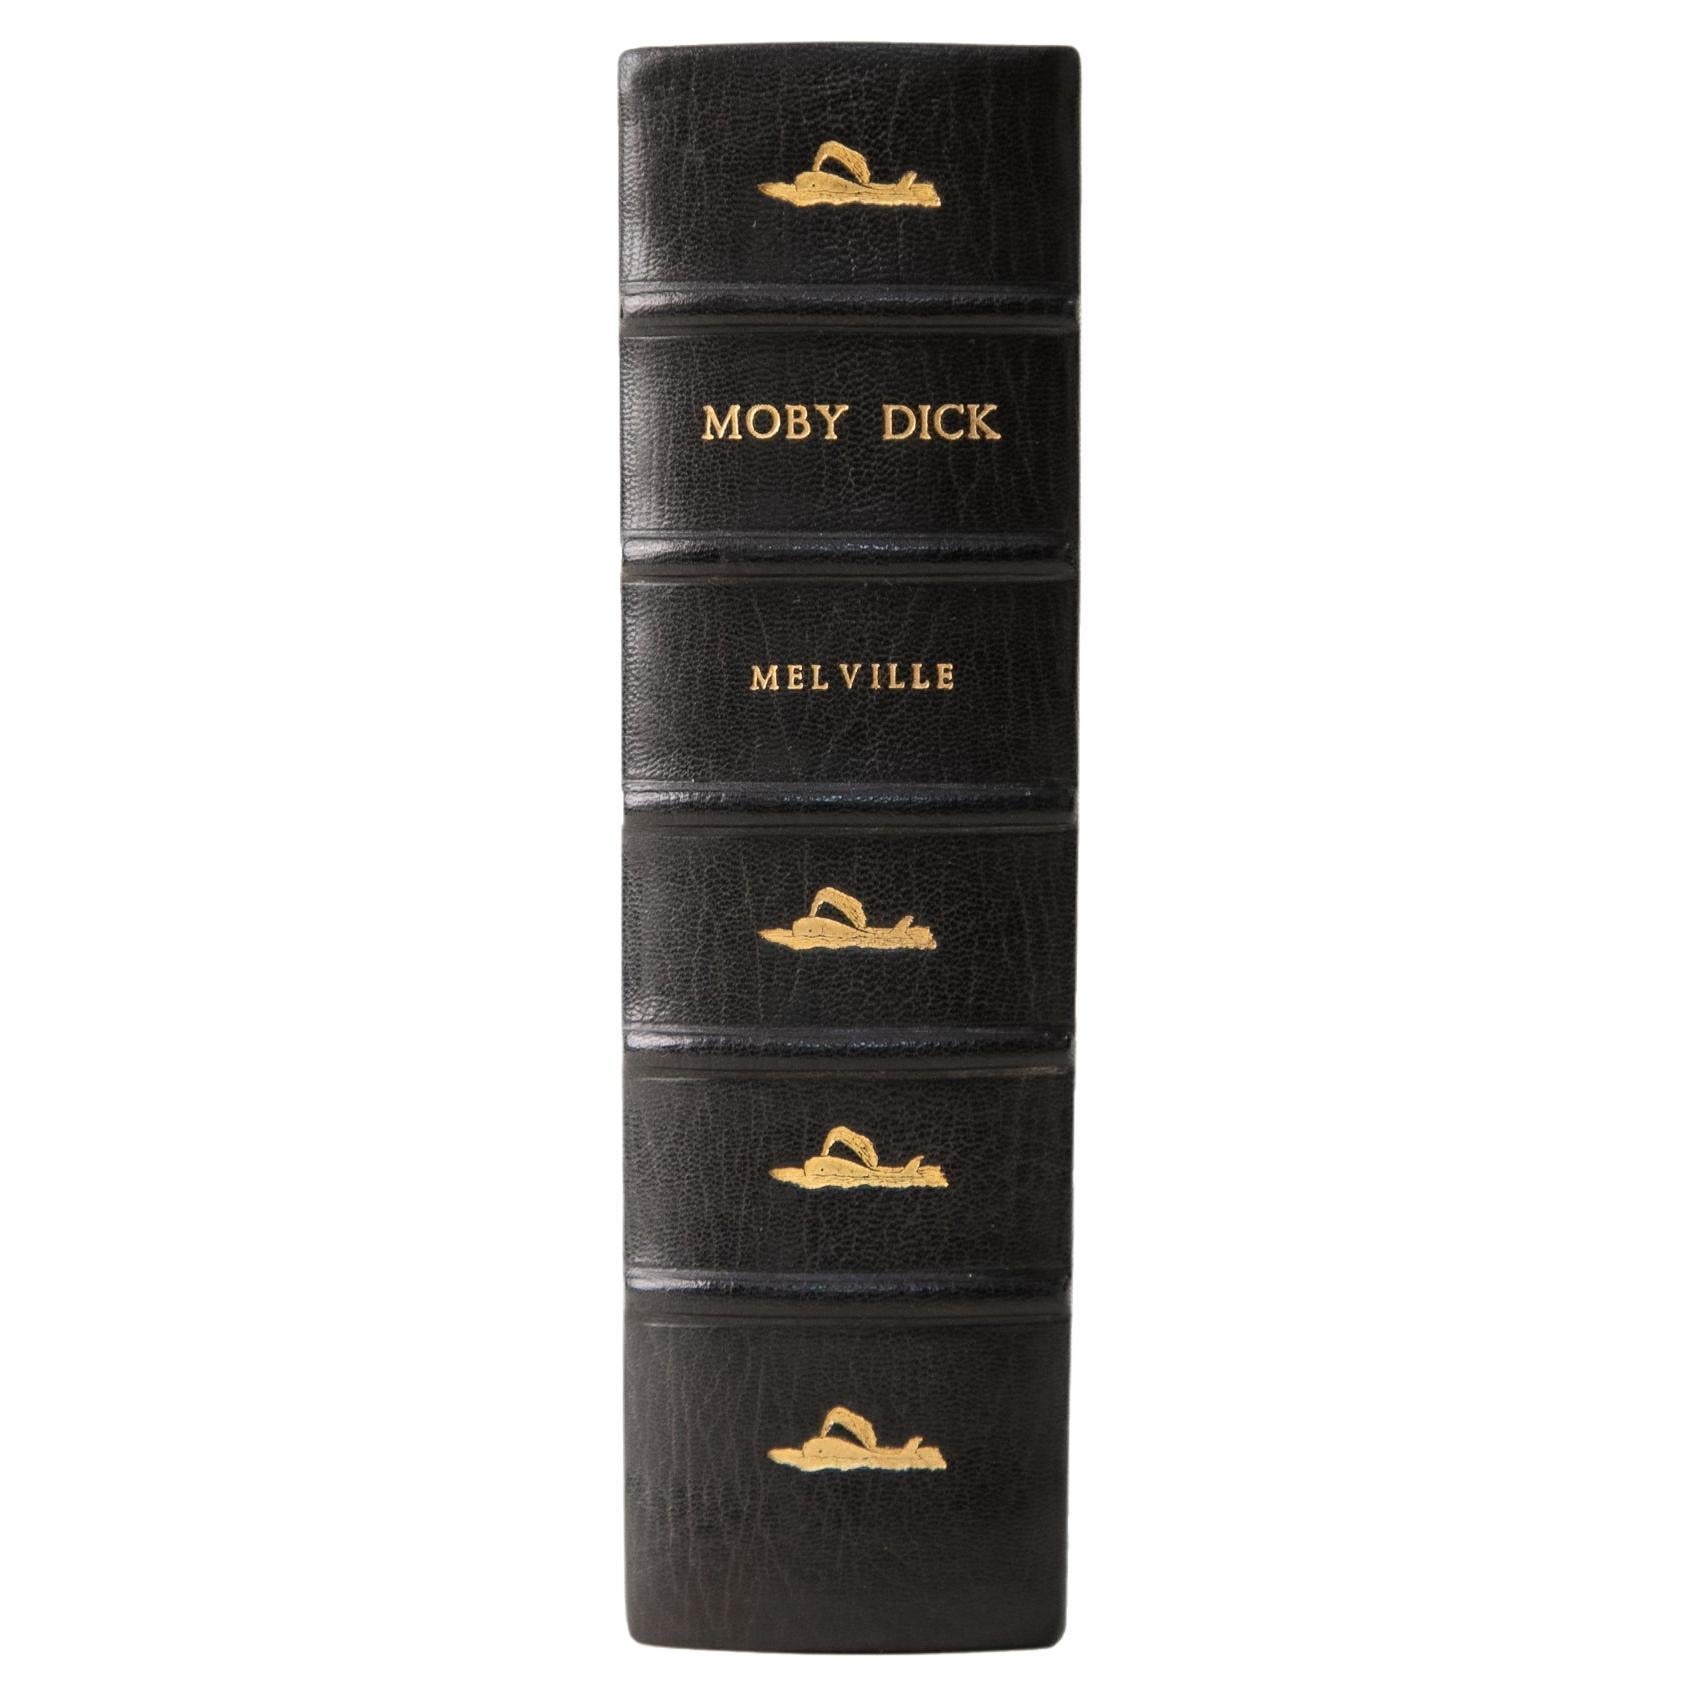 1 Volume, Herman Melville, Moby Dick